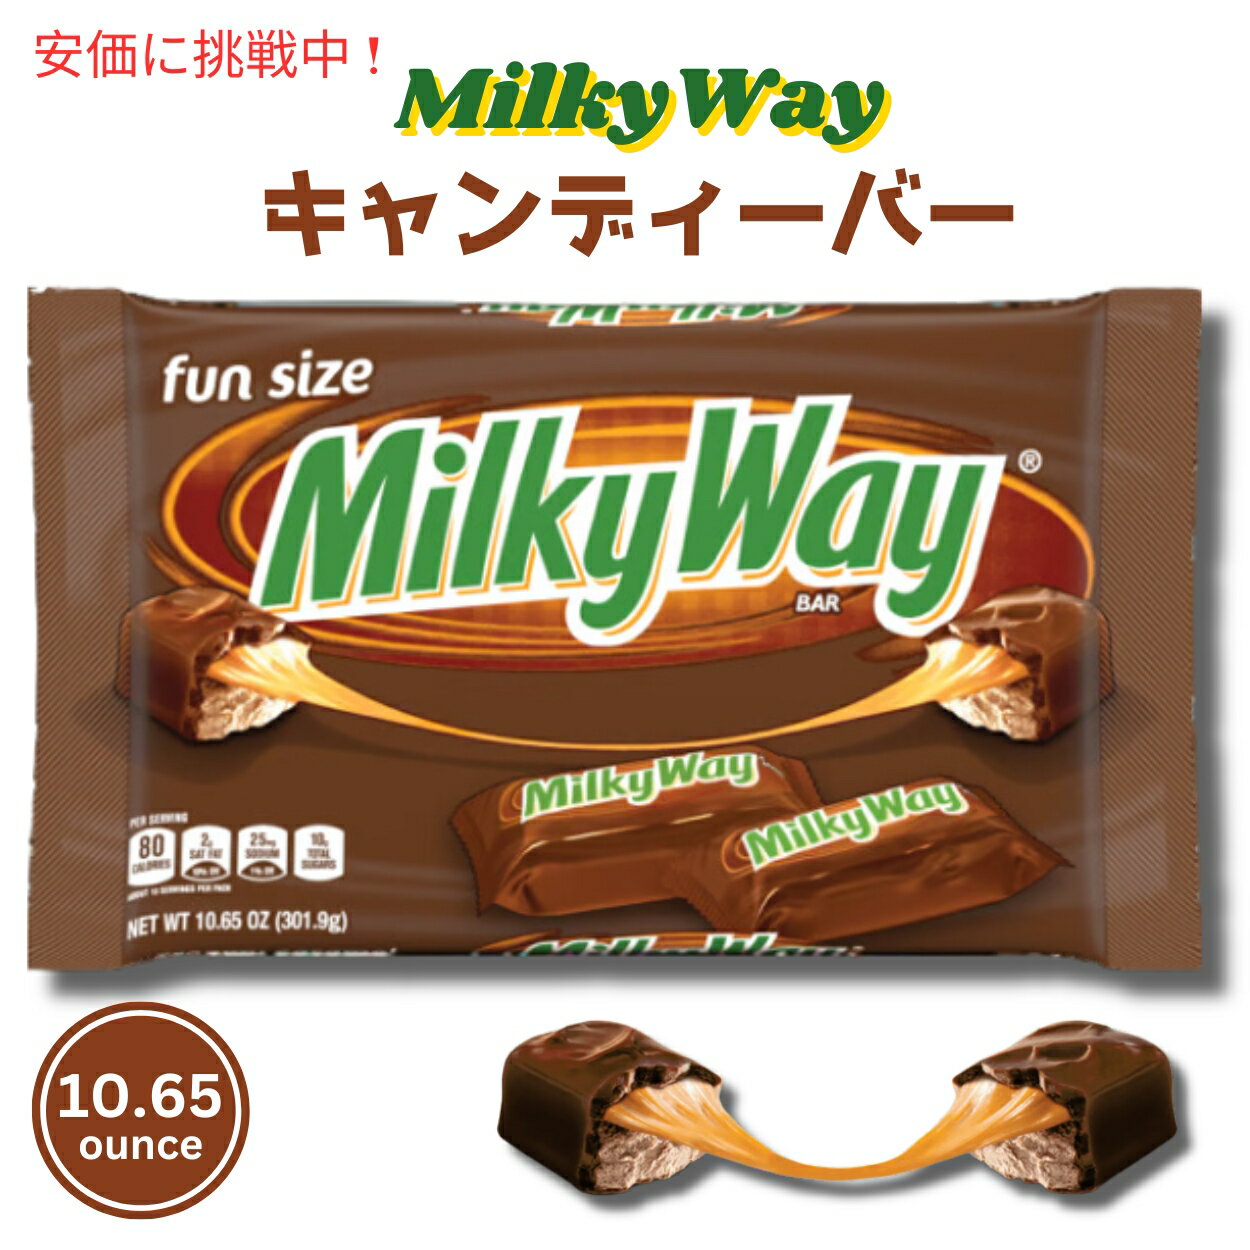 Milky Way ~L[EFC t@TCY ~N`R[g 301g Fun Size Milk Chocolate Candy Bars 10.65oz